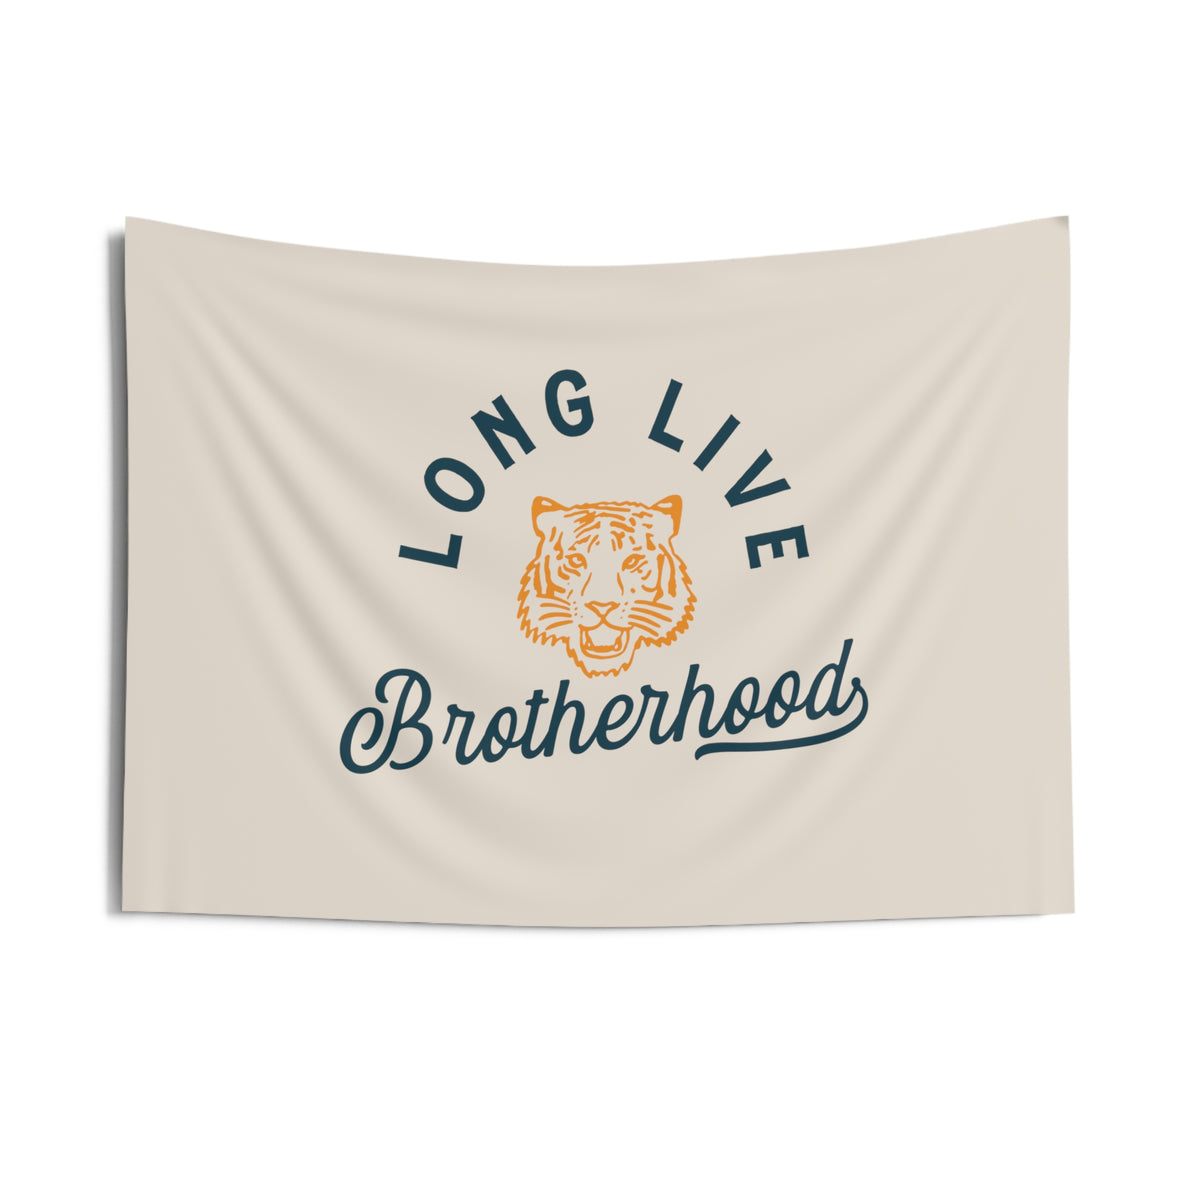 Long Live Brotherhood Indoor Wall Tapestries